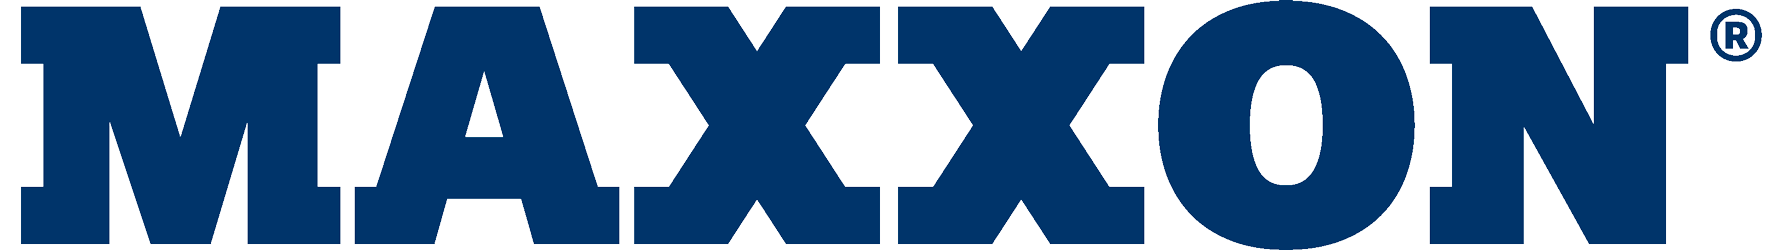 maxxon logo